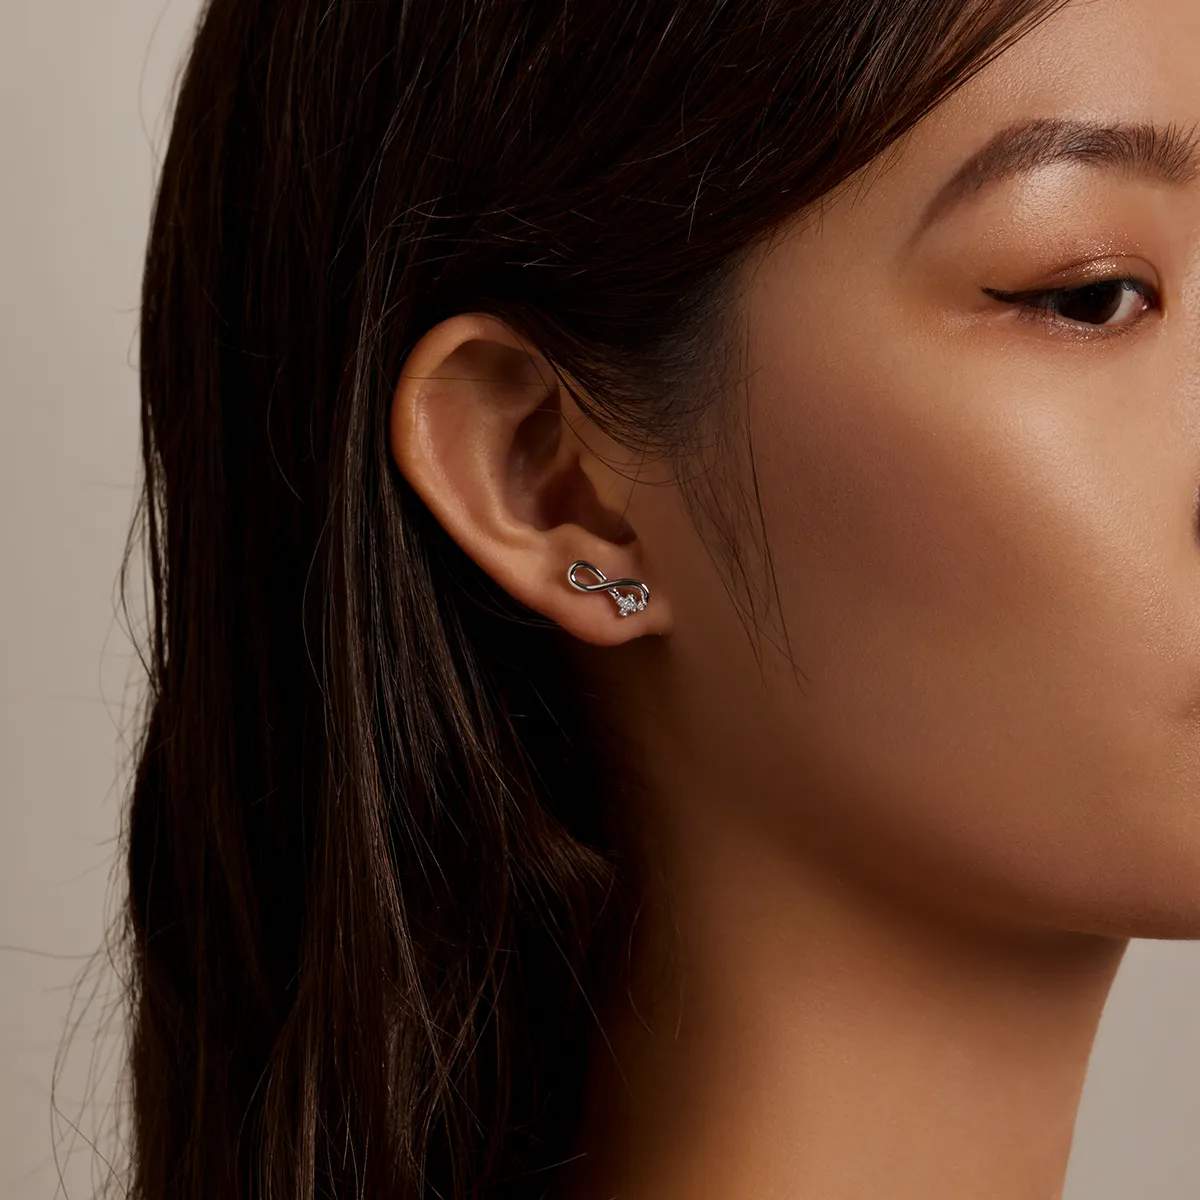 Pandora Style Infinity Symbol - Refined Stud Earrings - BSE544